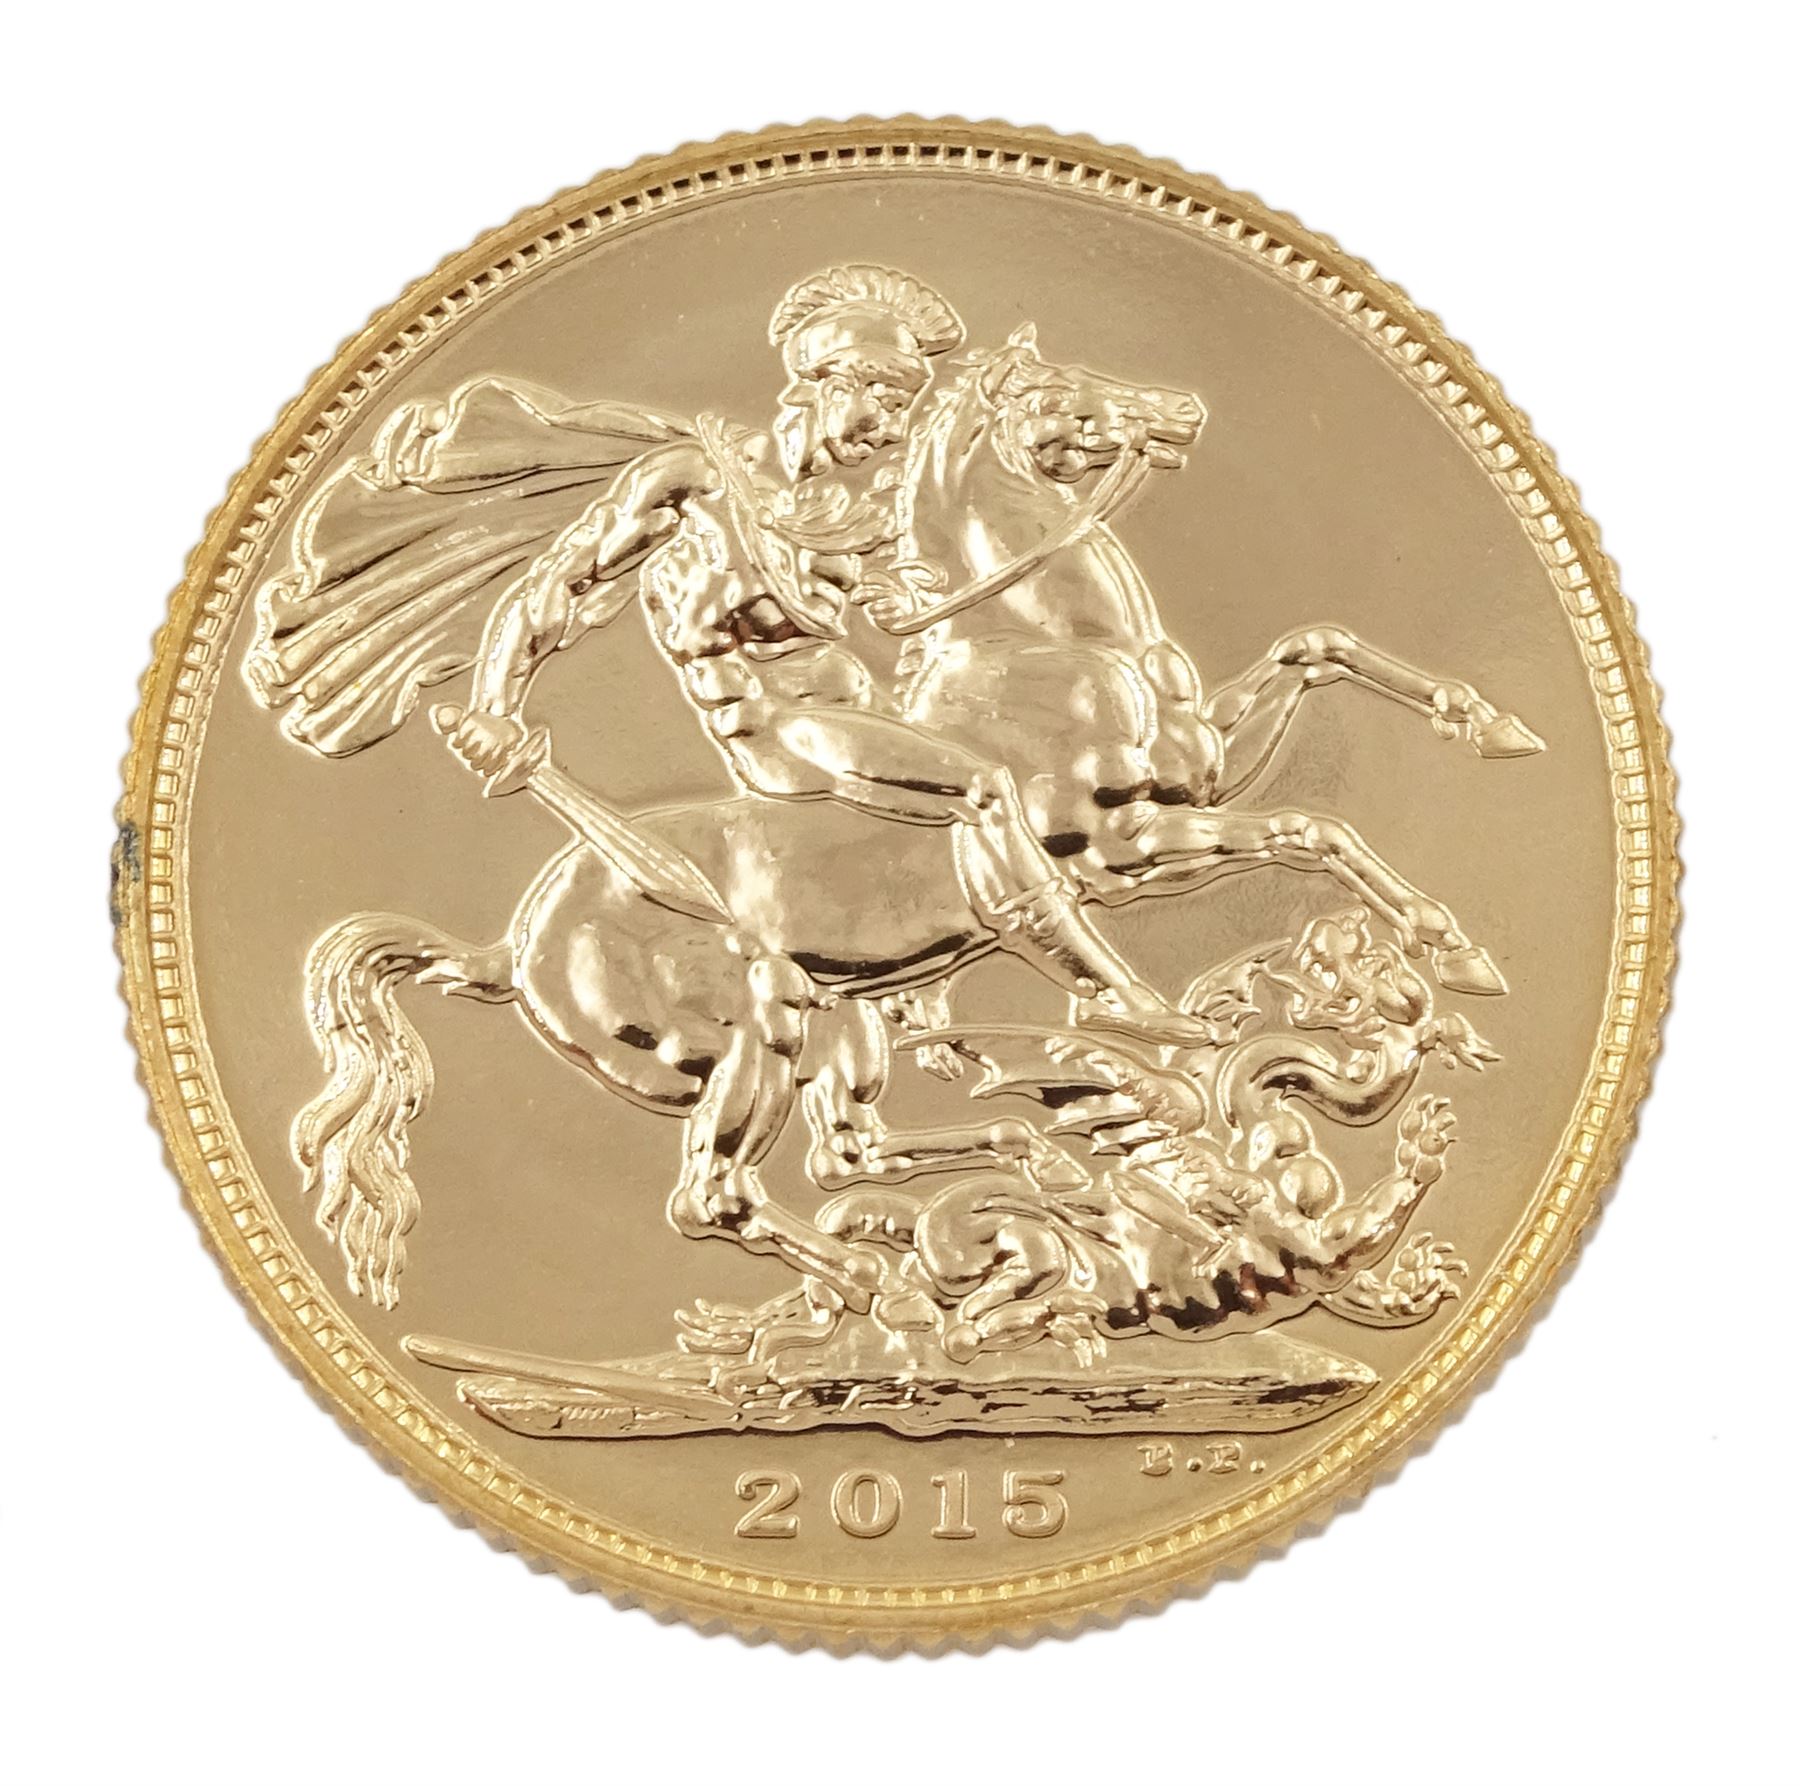 Queen Elizabeth II 2015 gold full sovereign coin - Image 2 of 3